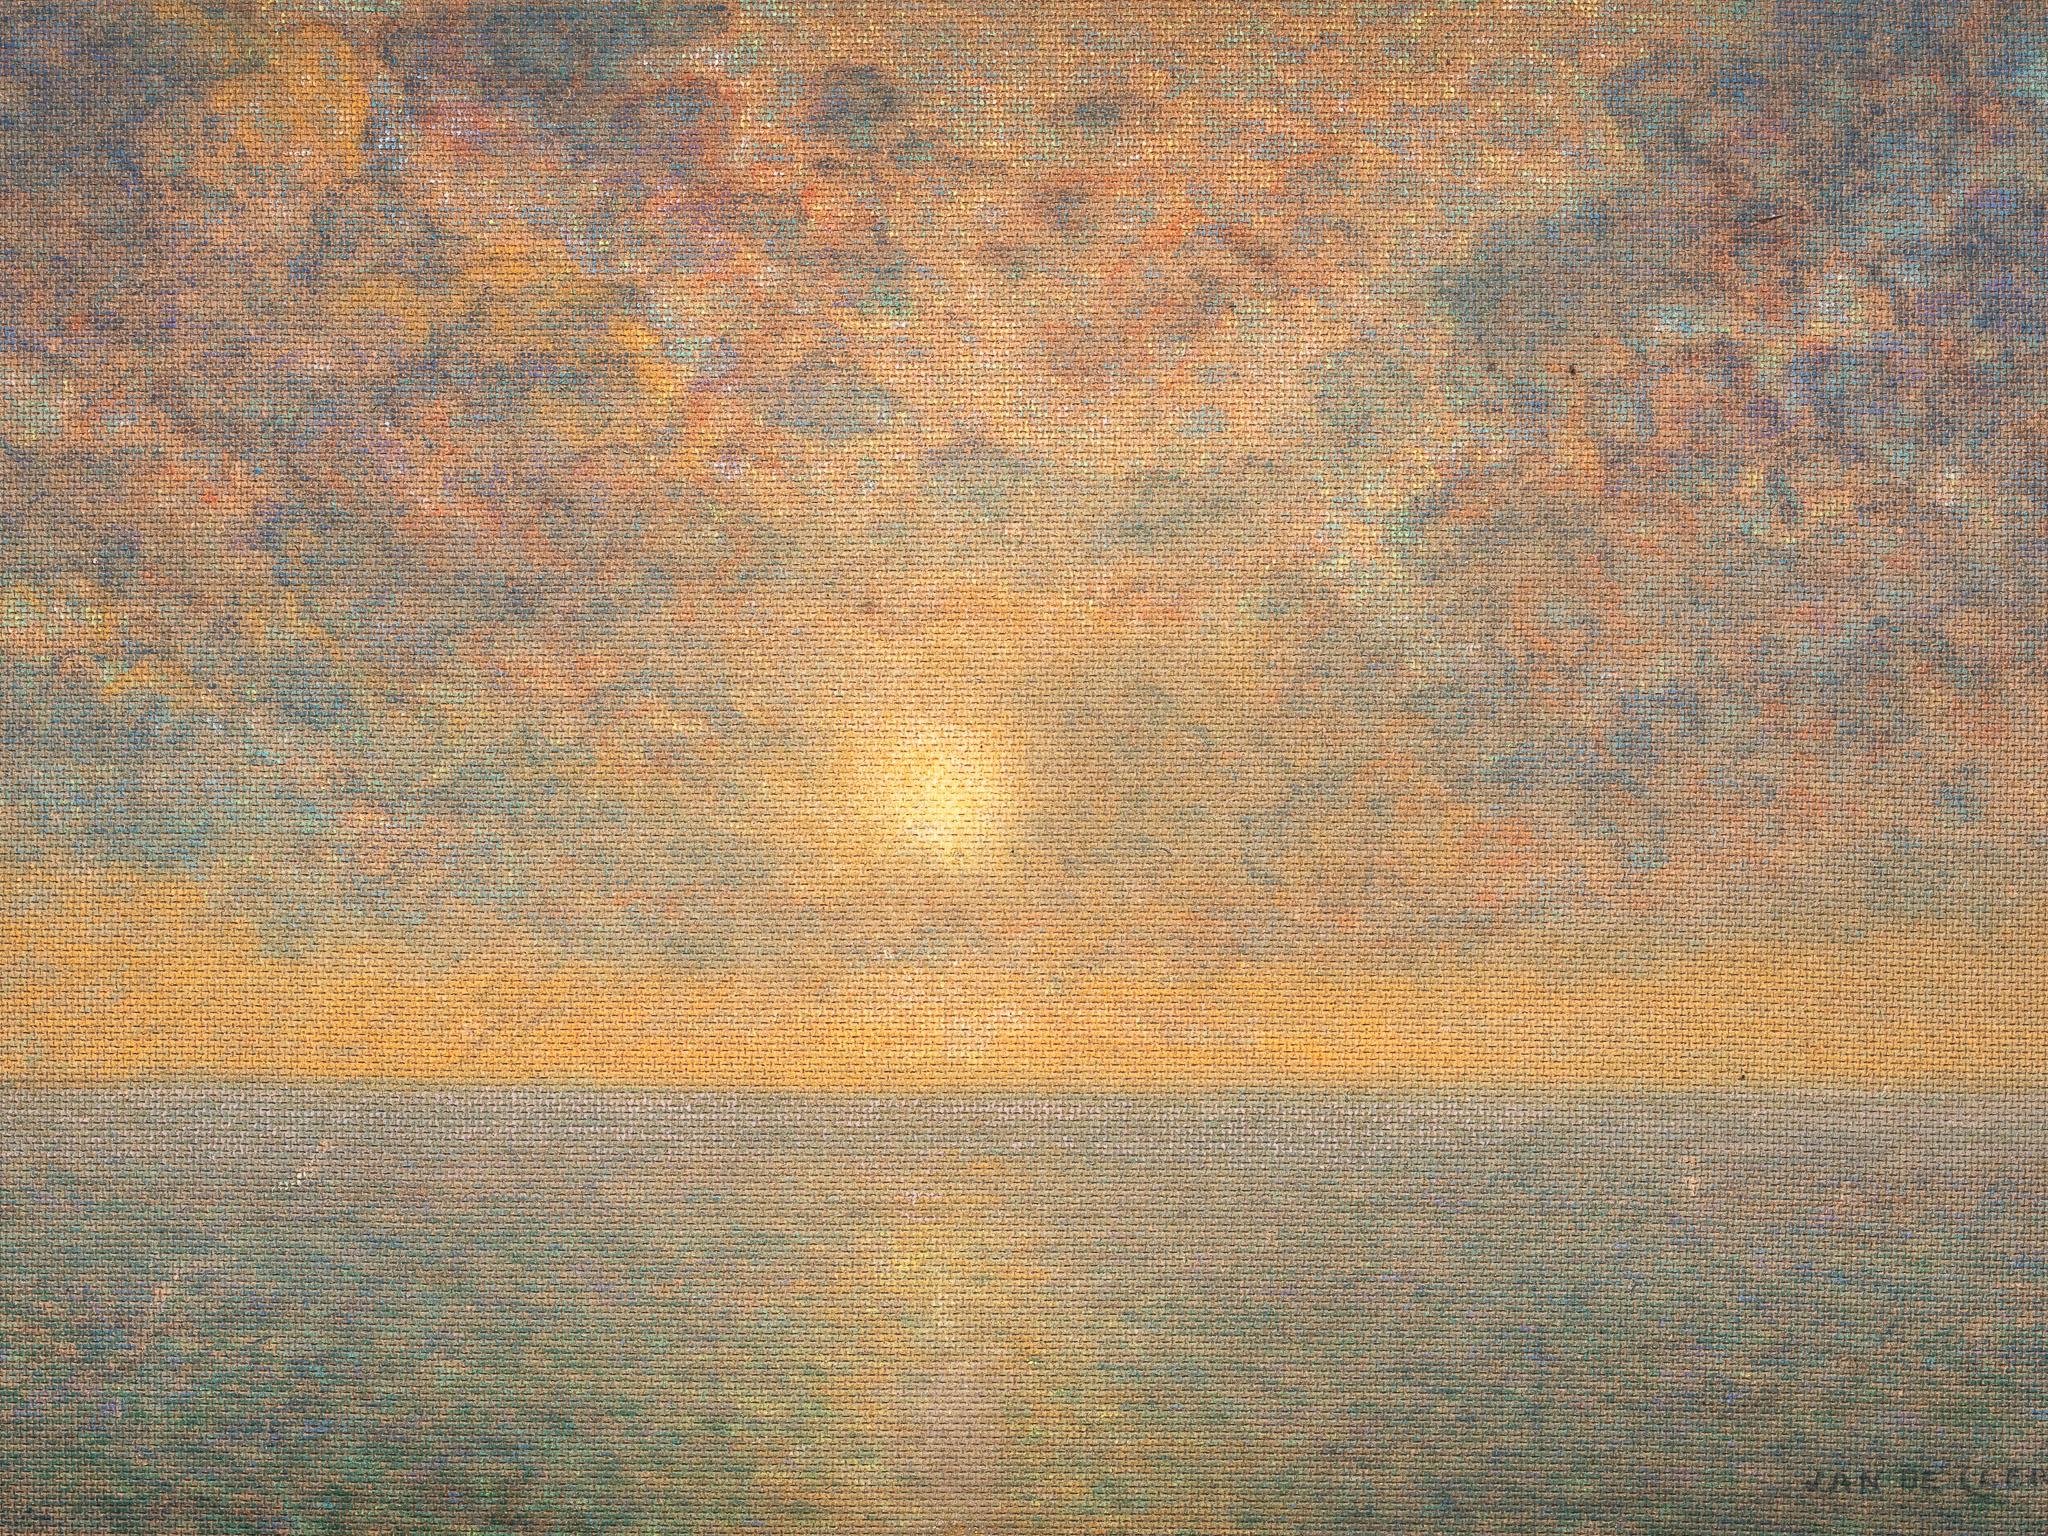 Sunset over the Sea, Jan de Clerck (1891 - 1964), Oil on Unalit, Signed.